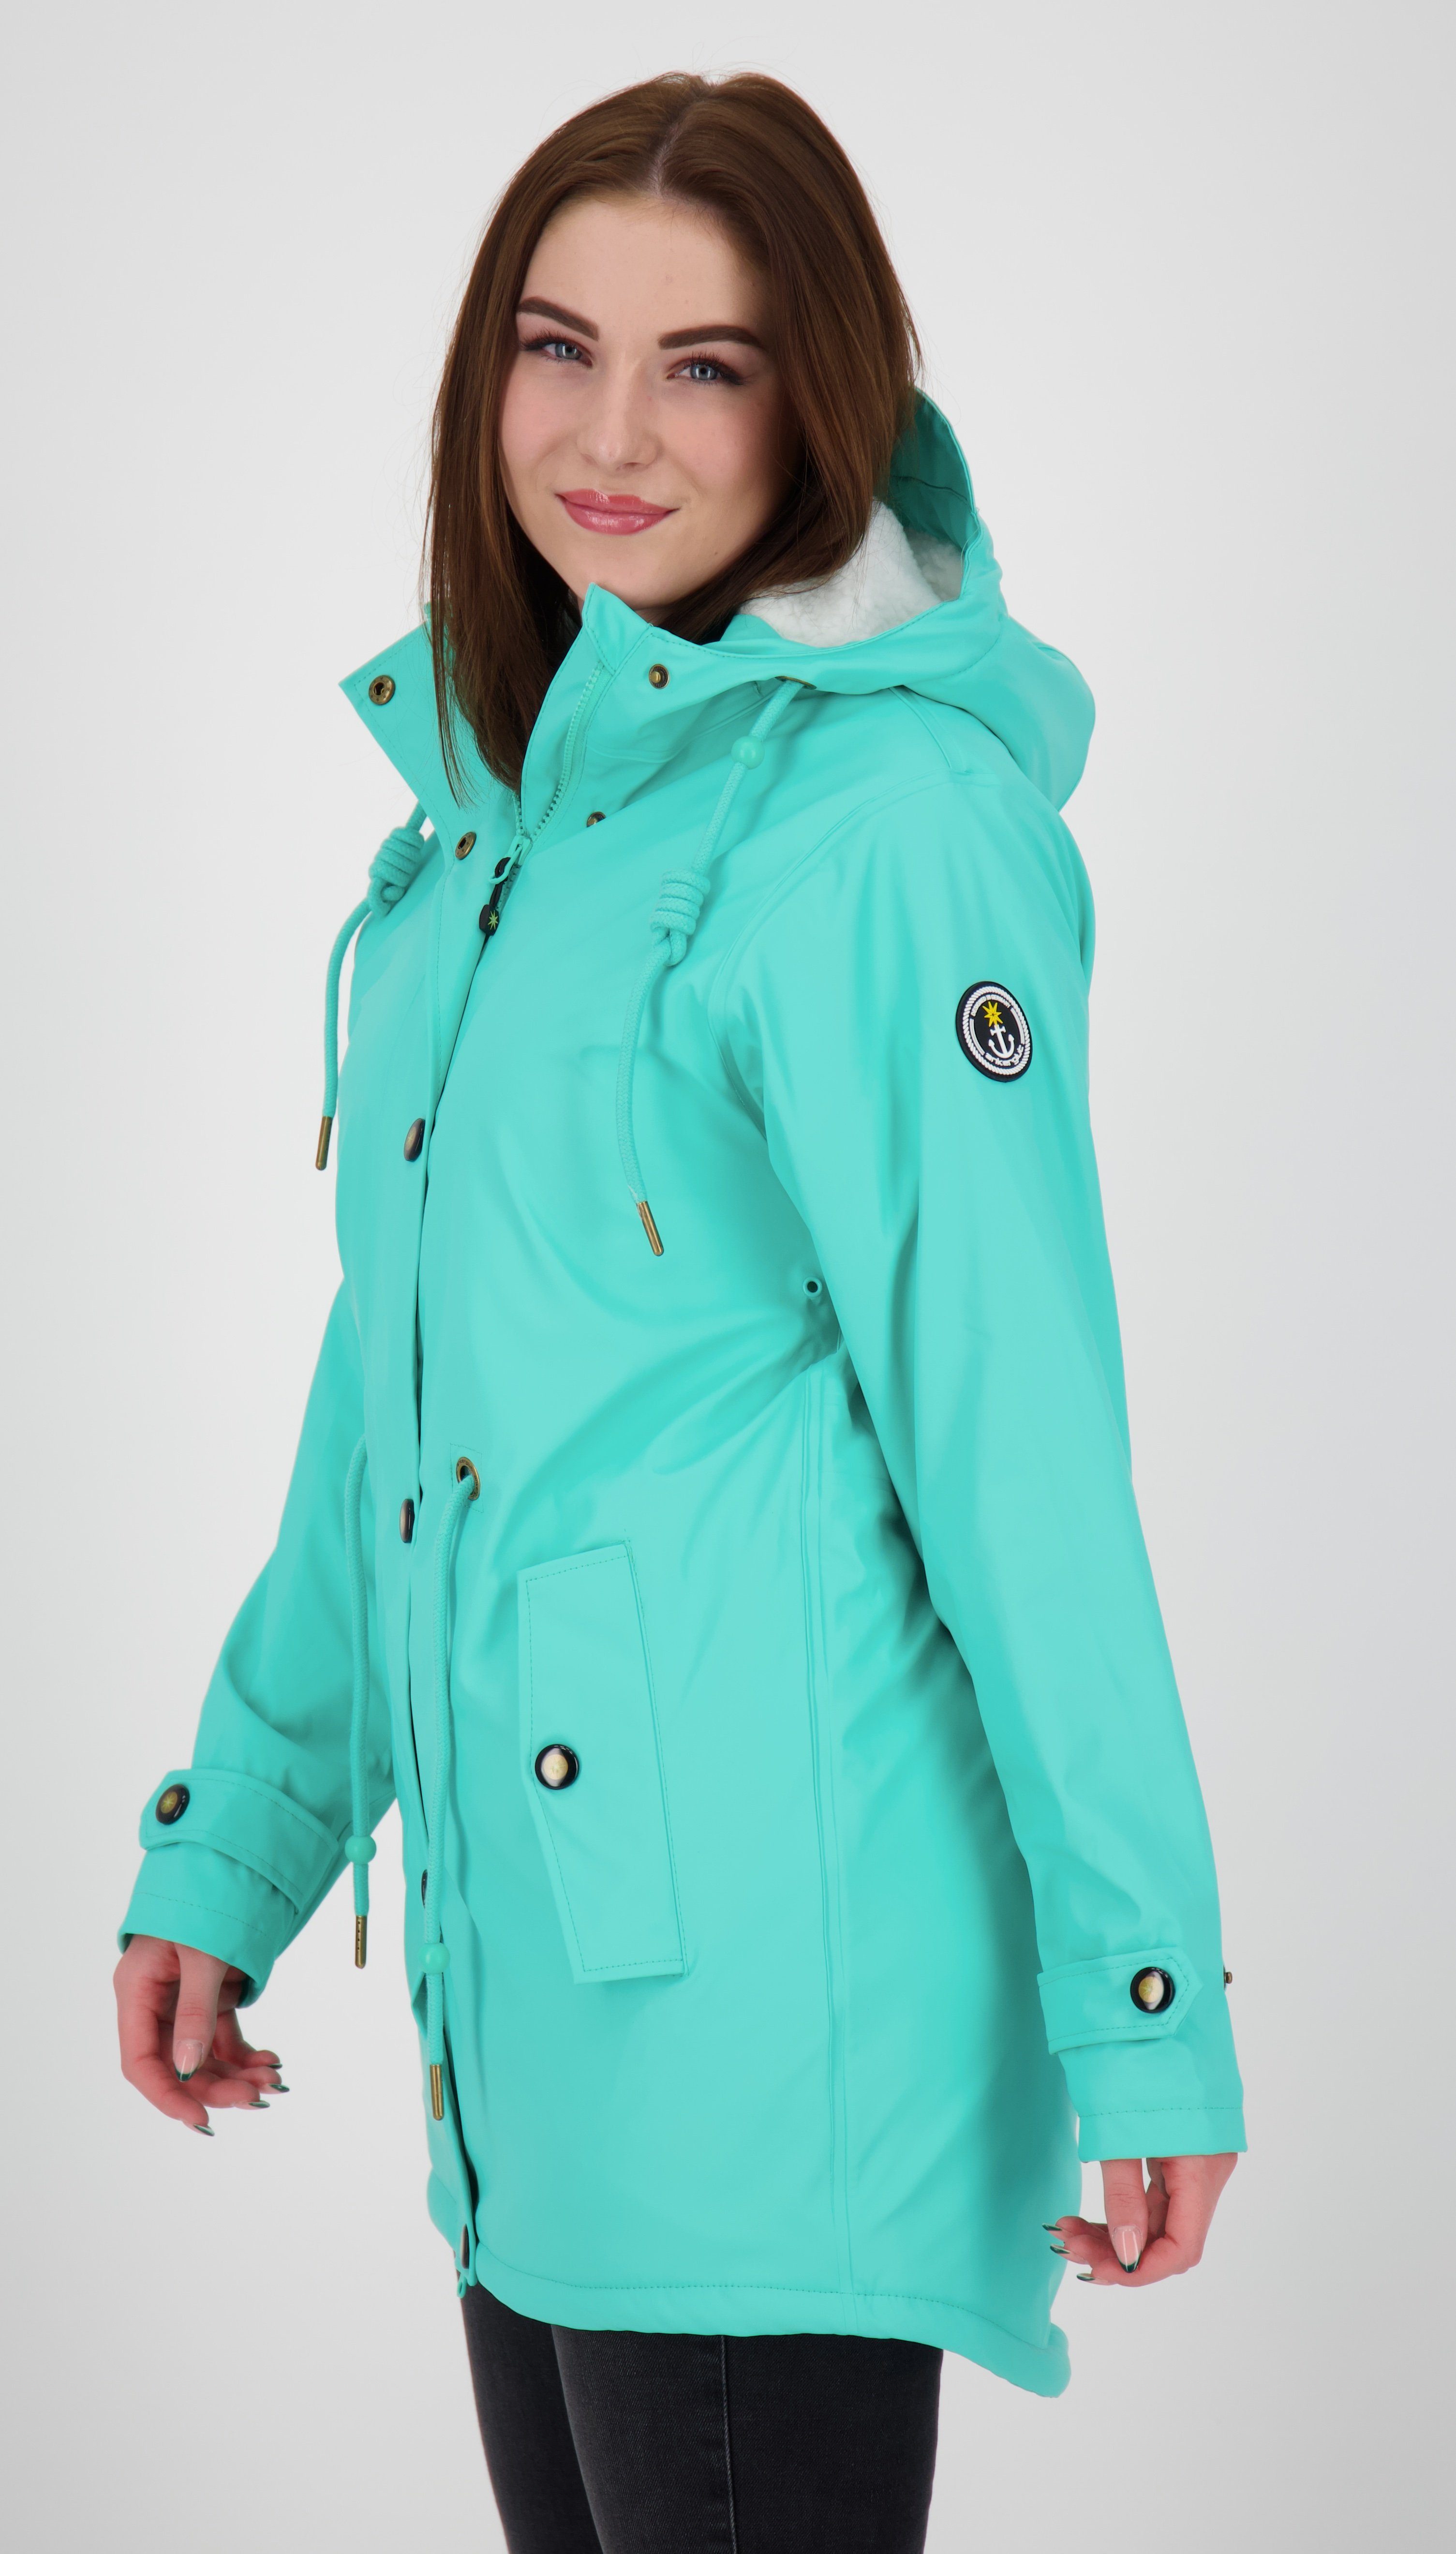 DEPROC Active Regenjacke auch ANKERGLUT & Großen turquoise Größen WOMEN CS Longjacket erhältlich #ankergluttraum in NEW Regenjacke